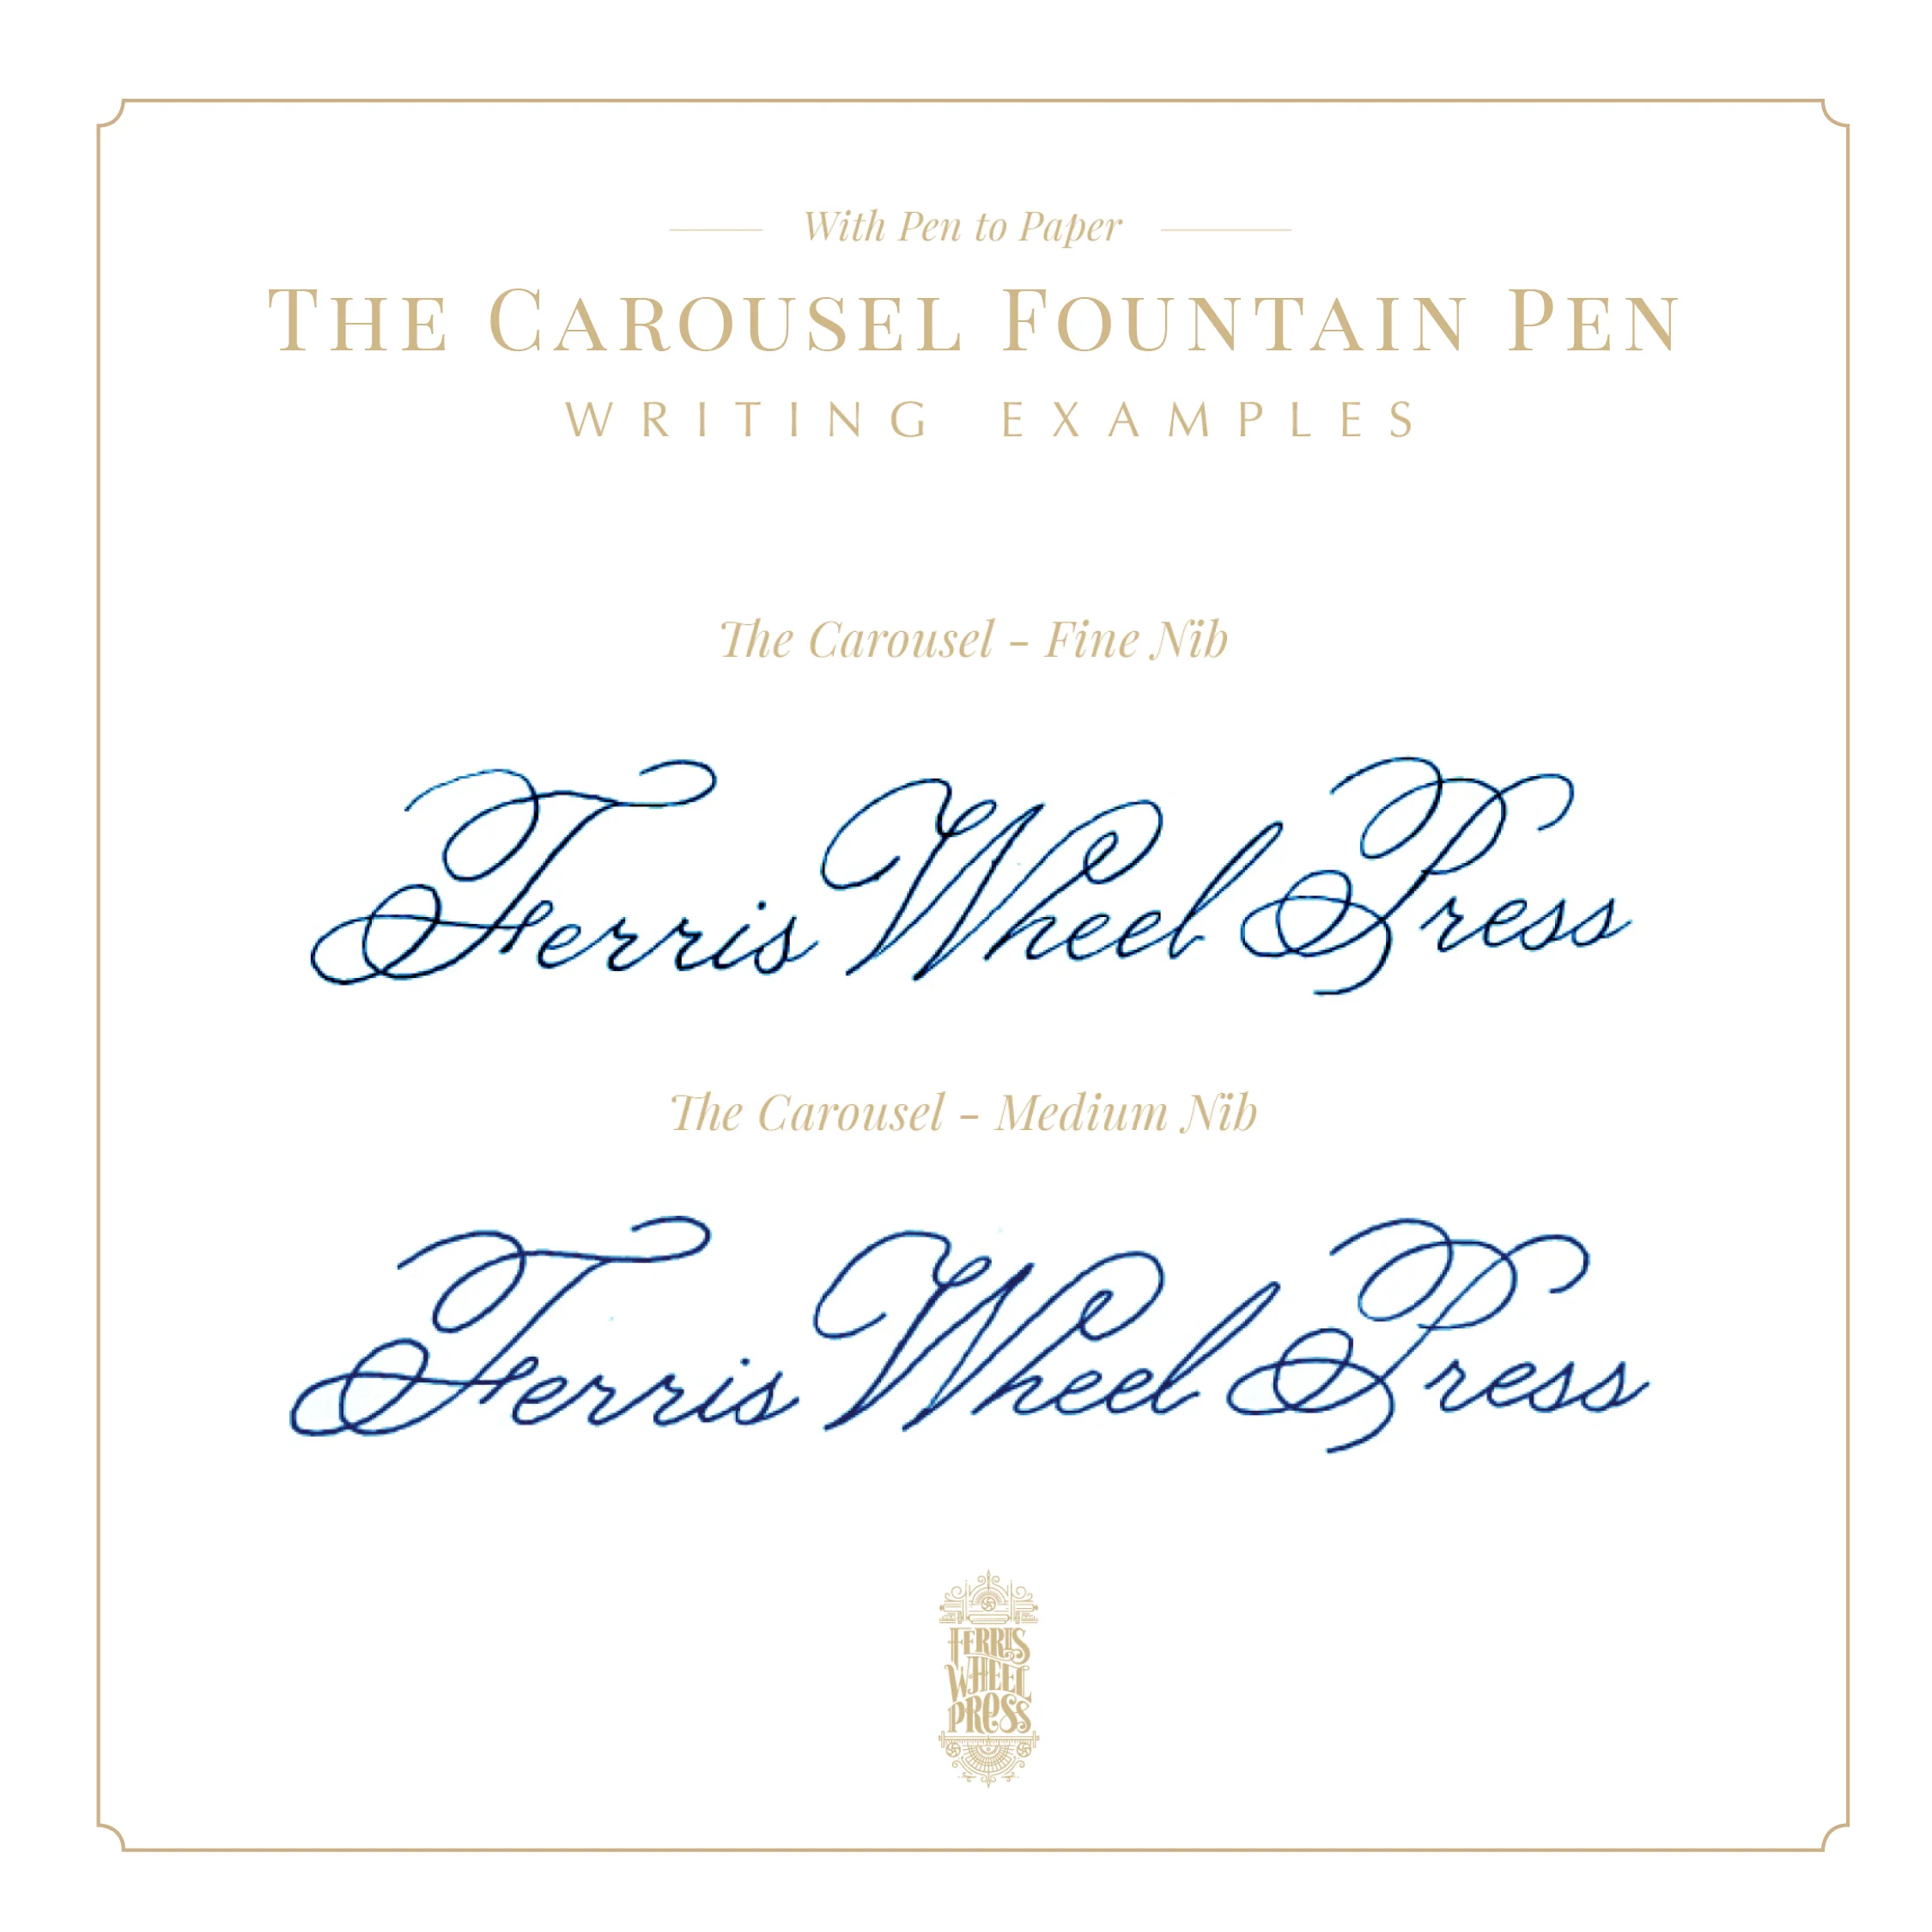 Ferris Wheel Press - Limited Edition - The Carousel Fountain Pen - Brilliant Beanstalk